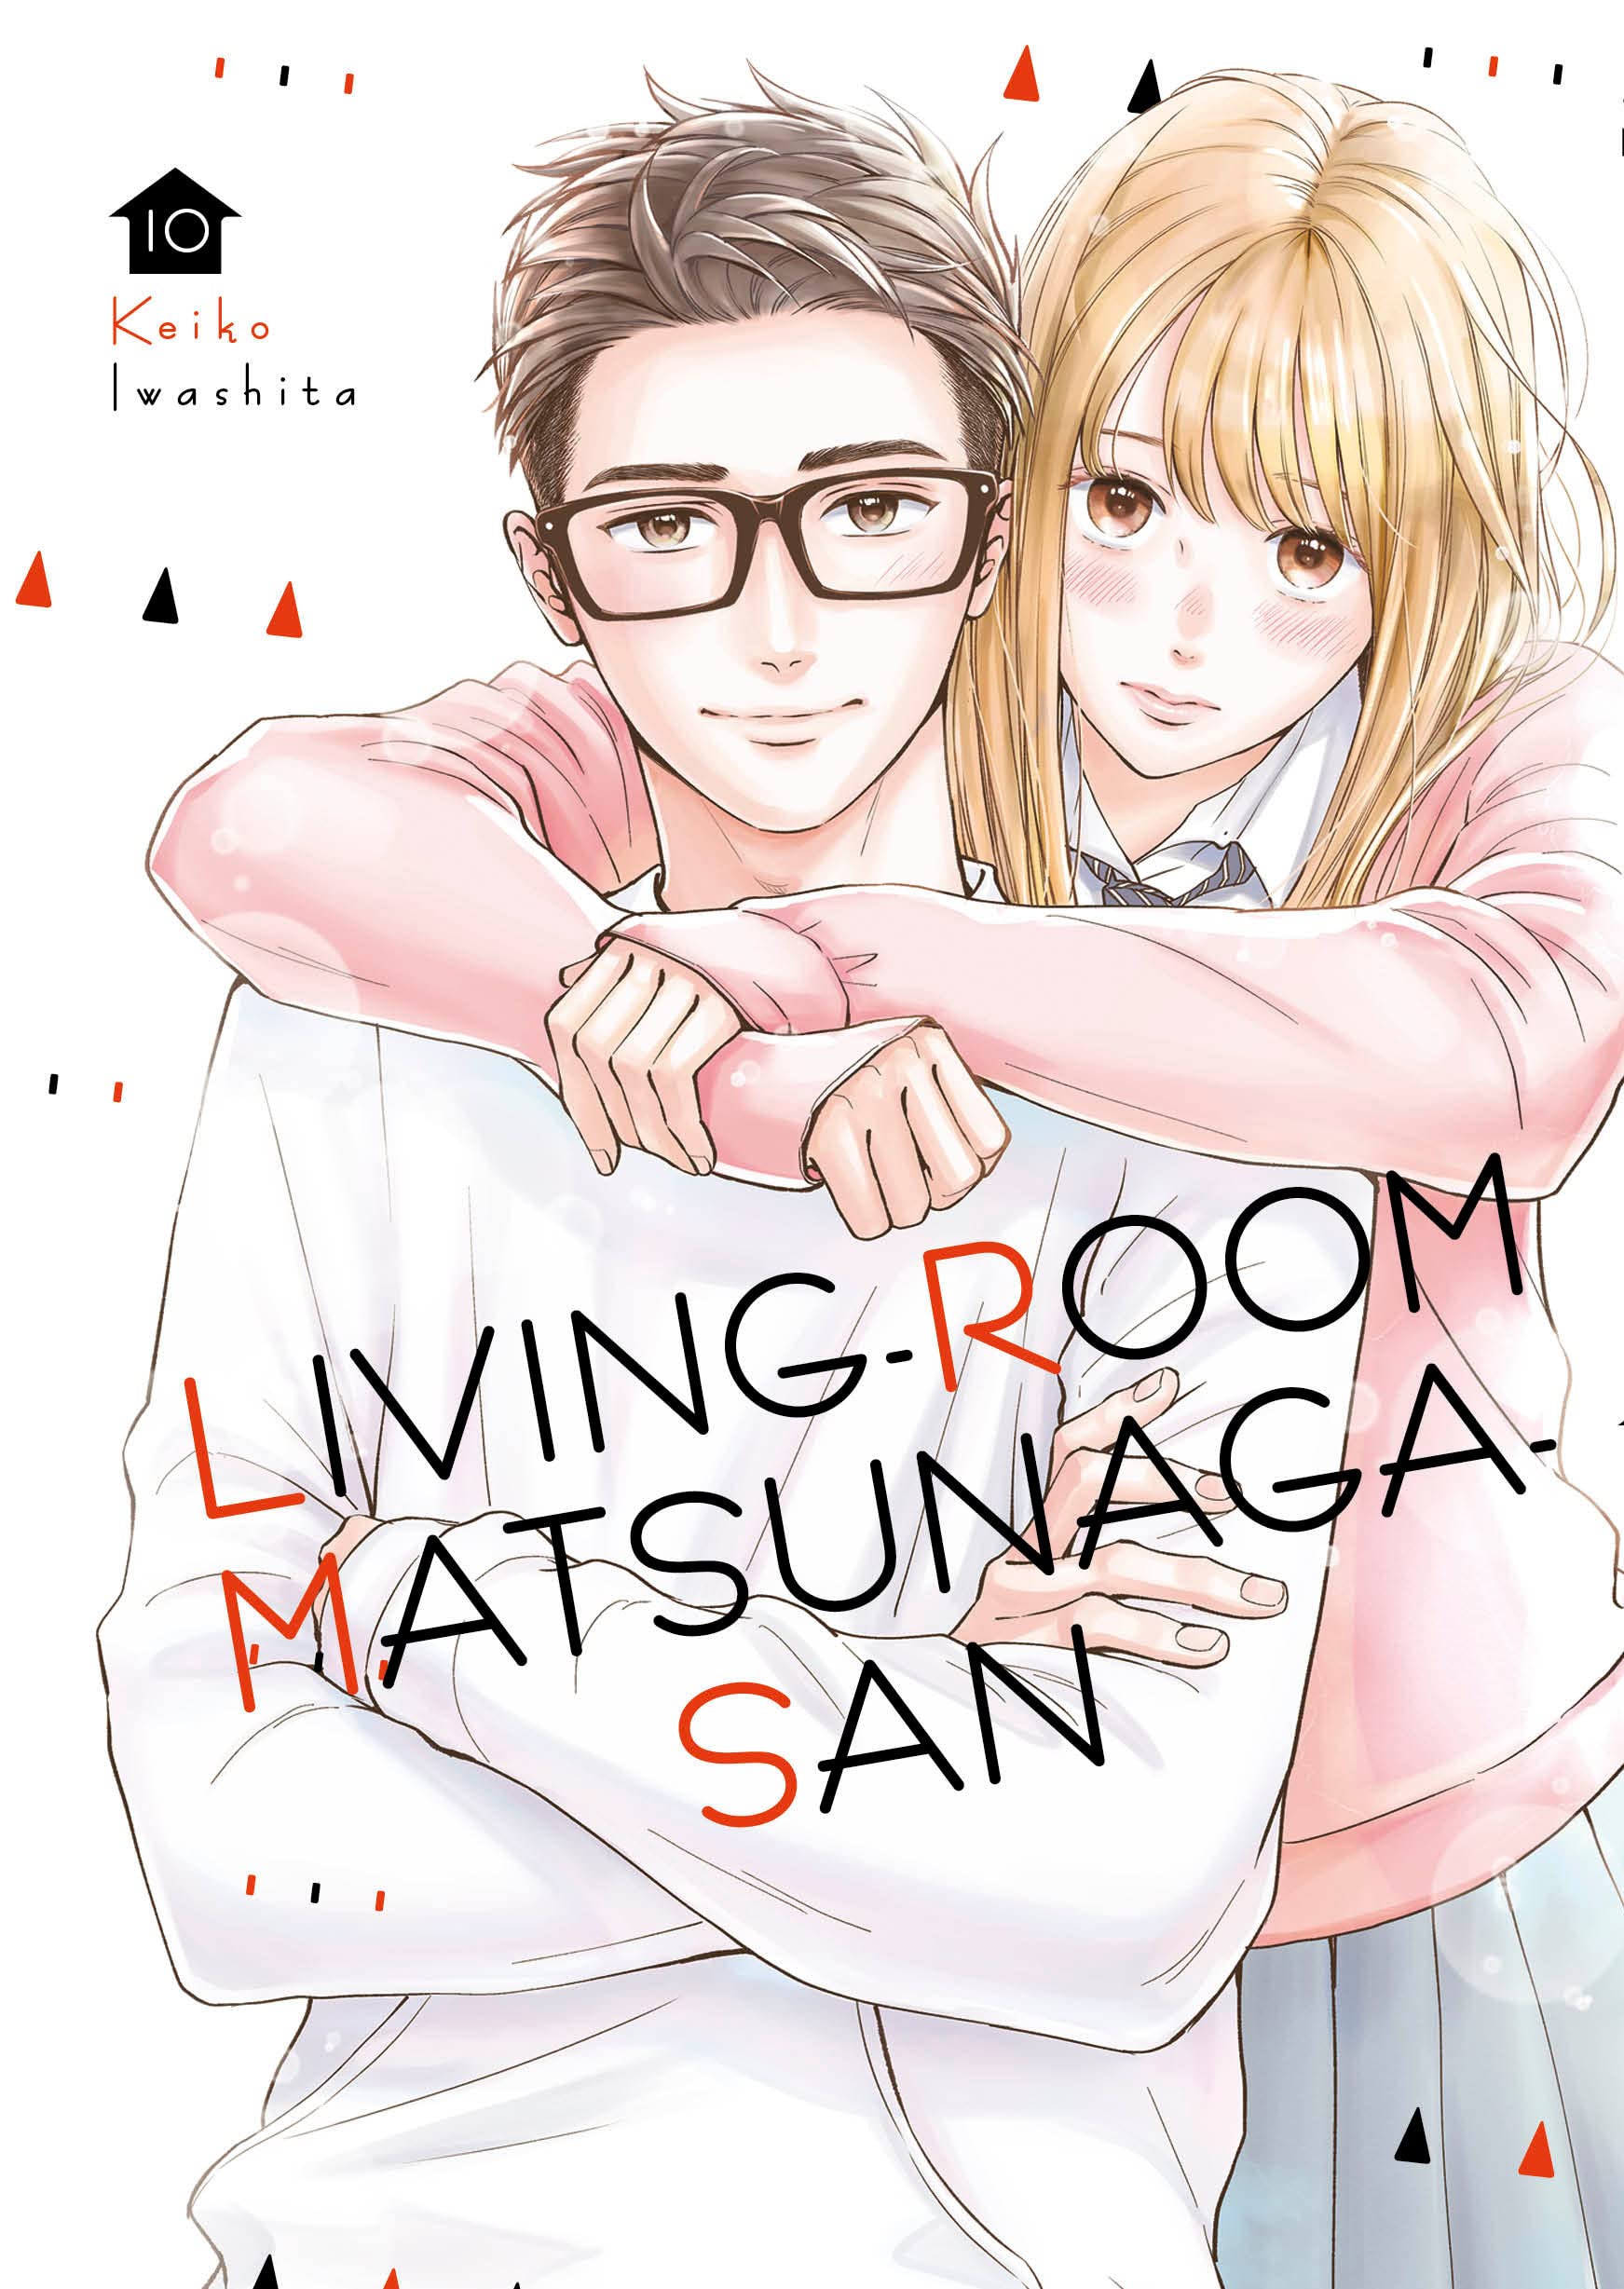 Living-Room Matsunaga-san - Volume 10